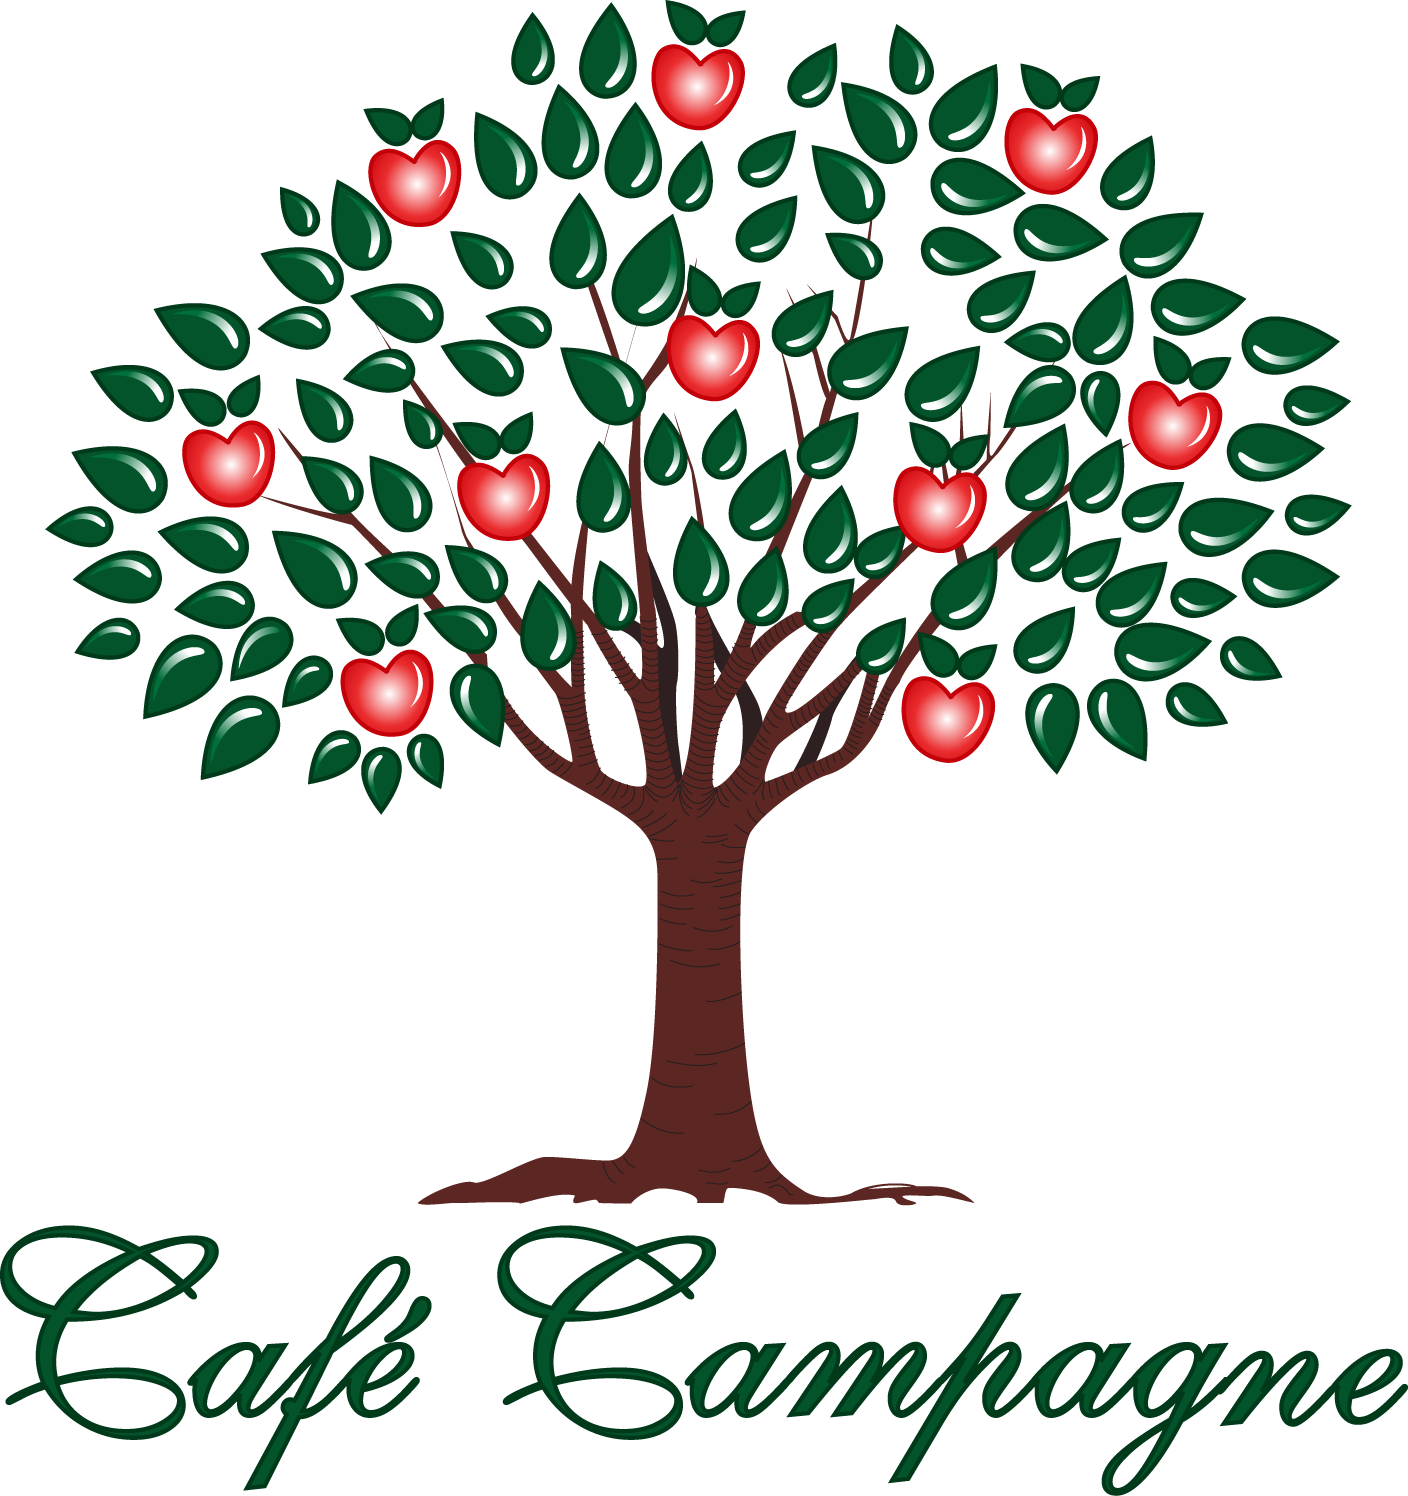 Café Campagne